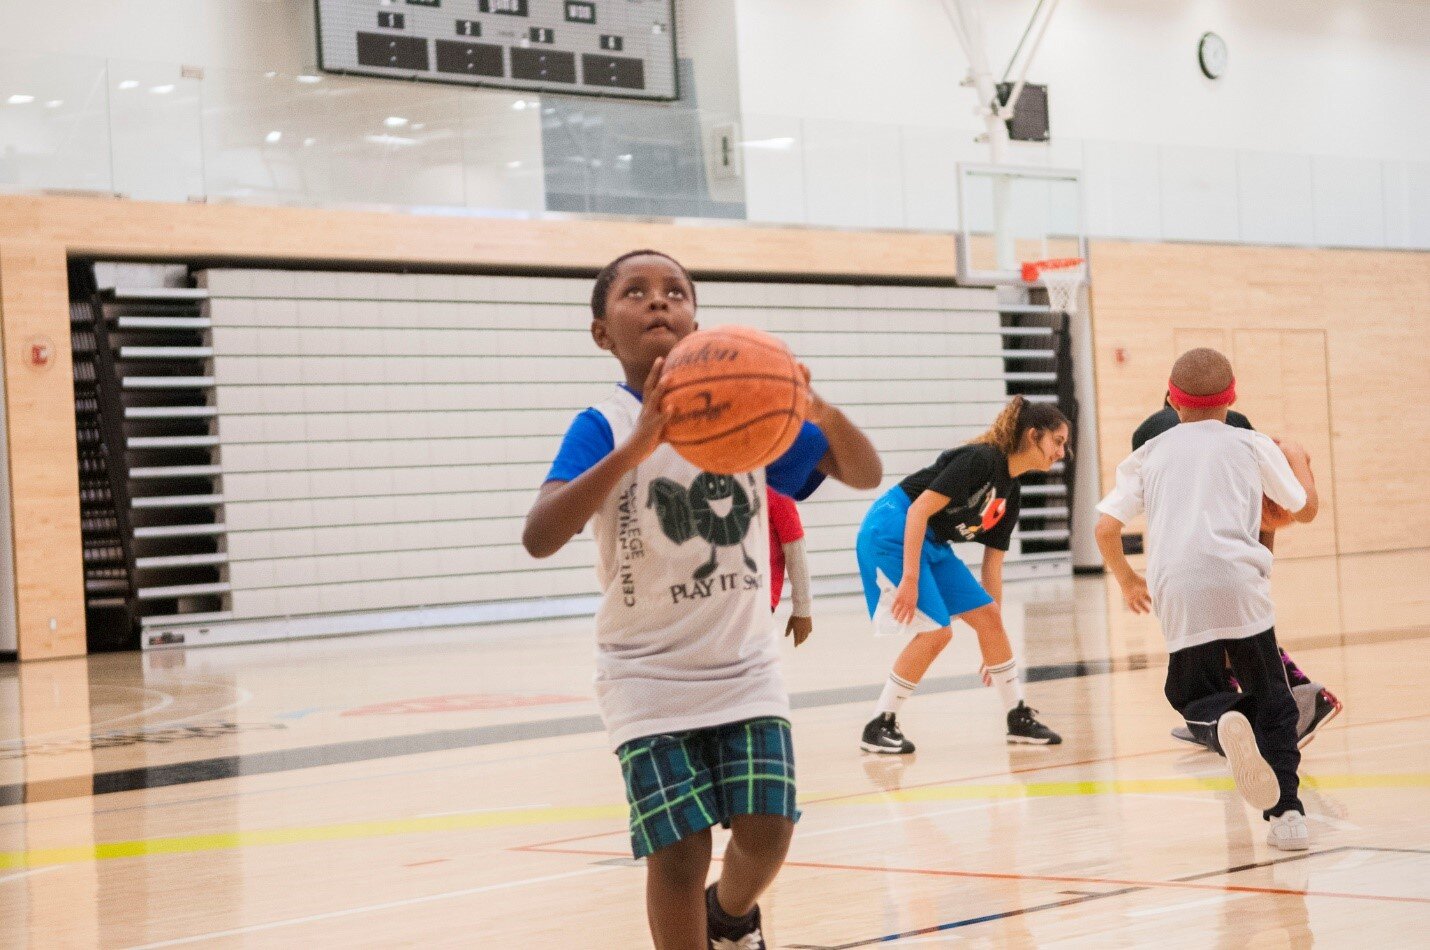 Black boy shooting a basketball